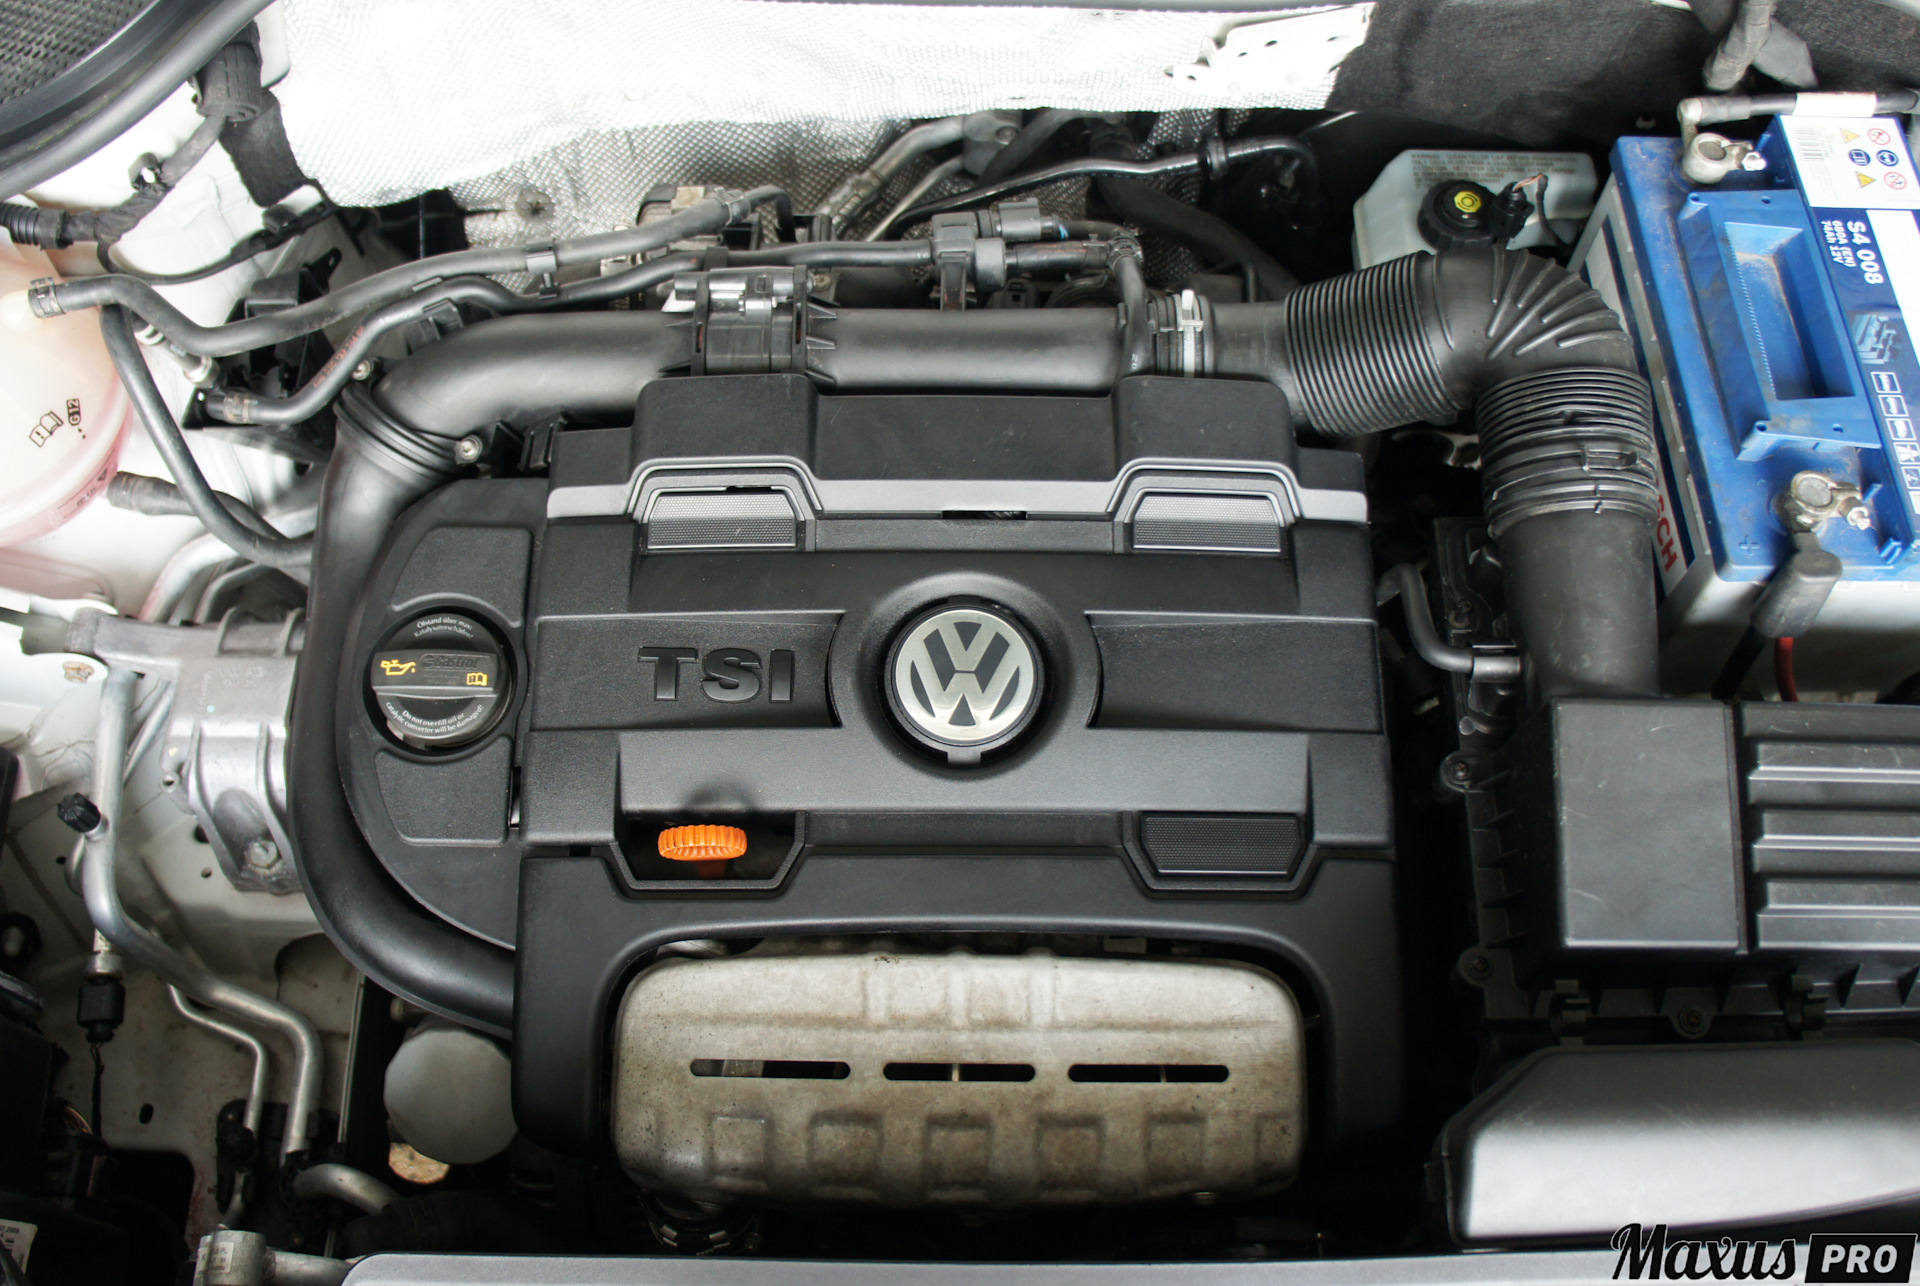 Фольксваген 1.4 122 л с. Двигатель Фольксваген 1.4 TSI. Volkswagen 1.4 TSI 150 Л.С. Двигатель Volkswagen Tiguan 1.4 TSI. 1.4 TSI ea111.